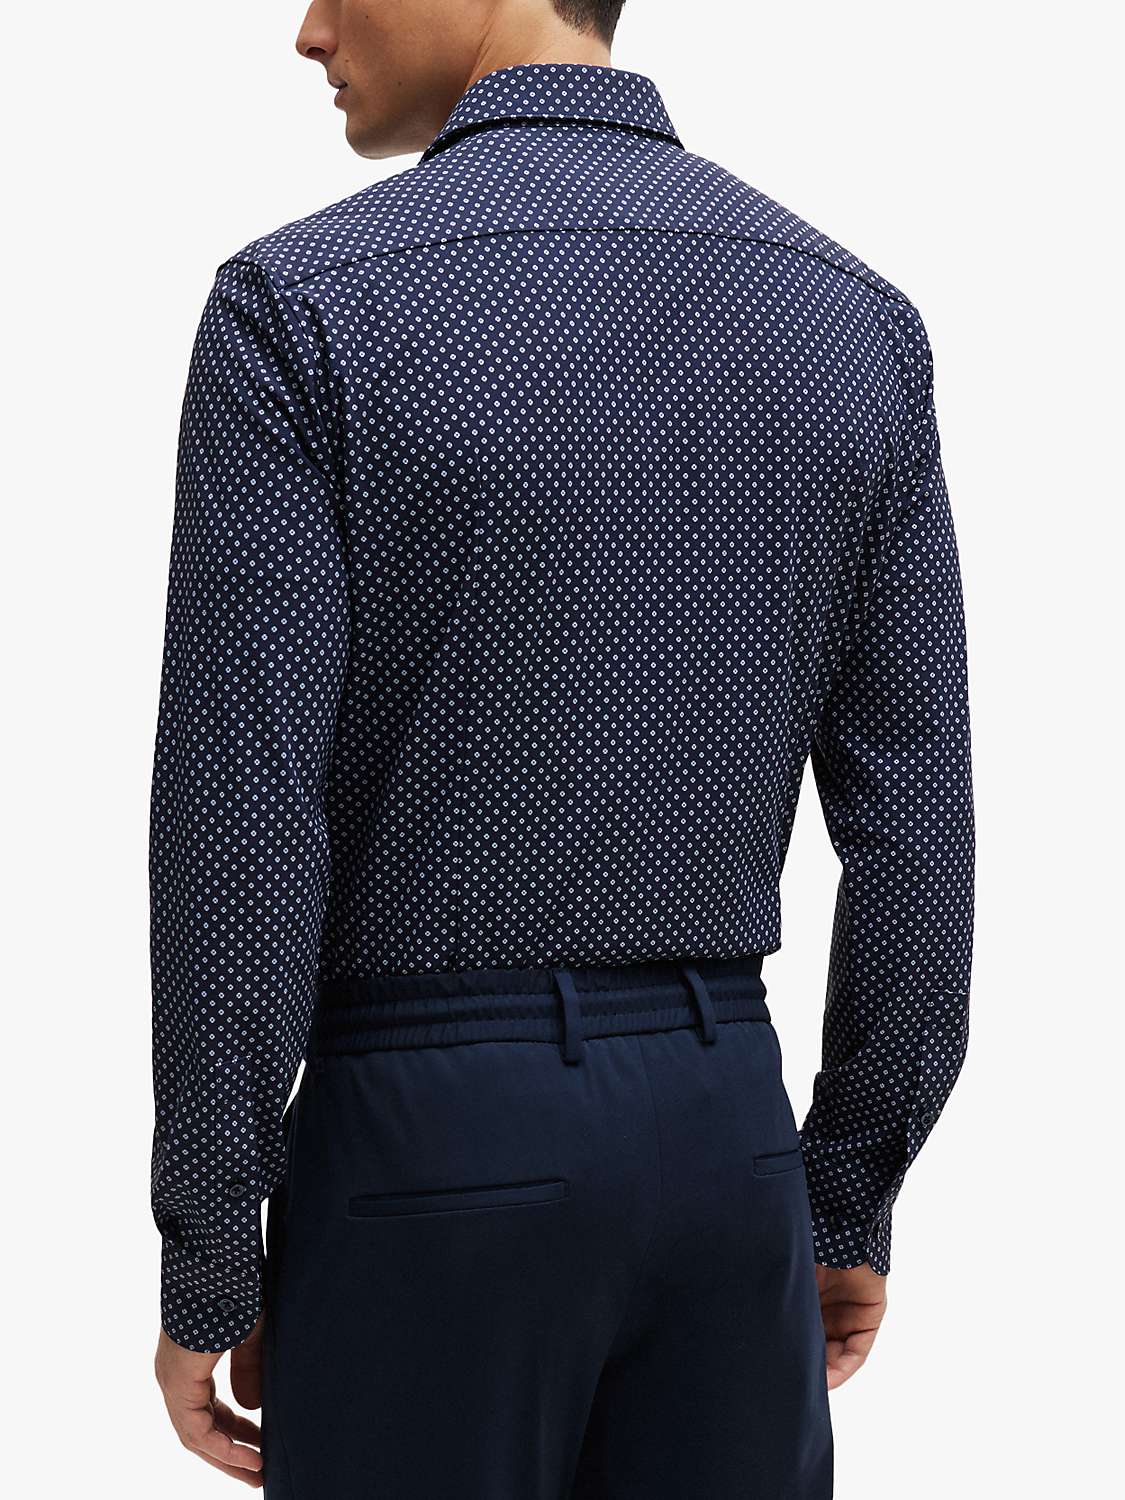 Buy BOSS Hank Spot Print Slim Fit Shirt, Dark Blue Online at johnlewis.com